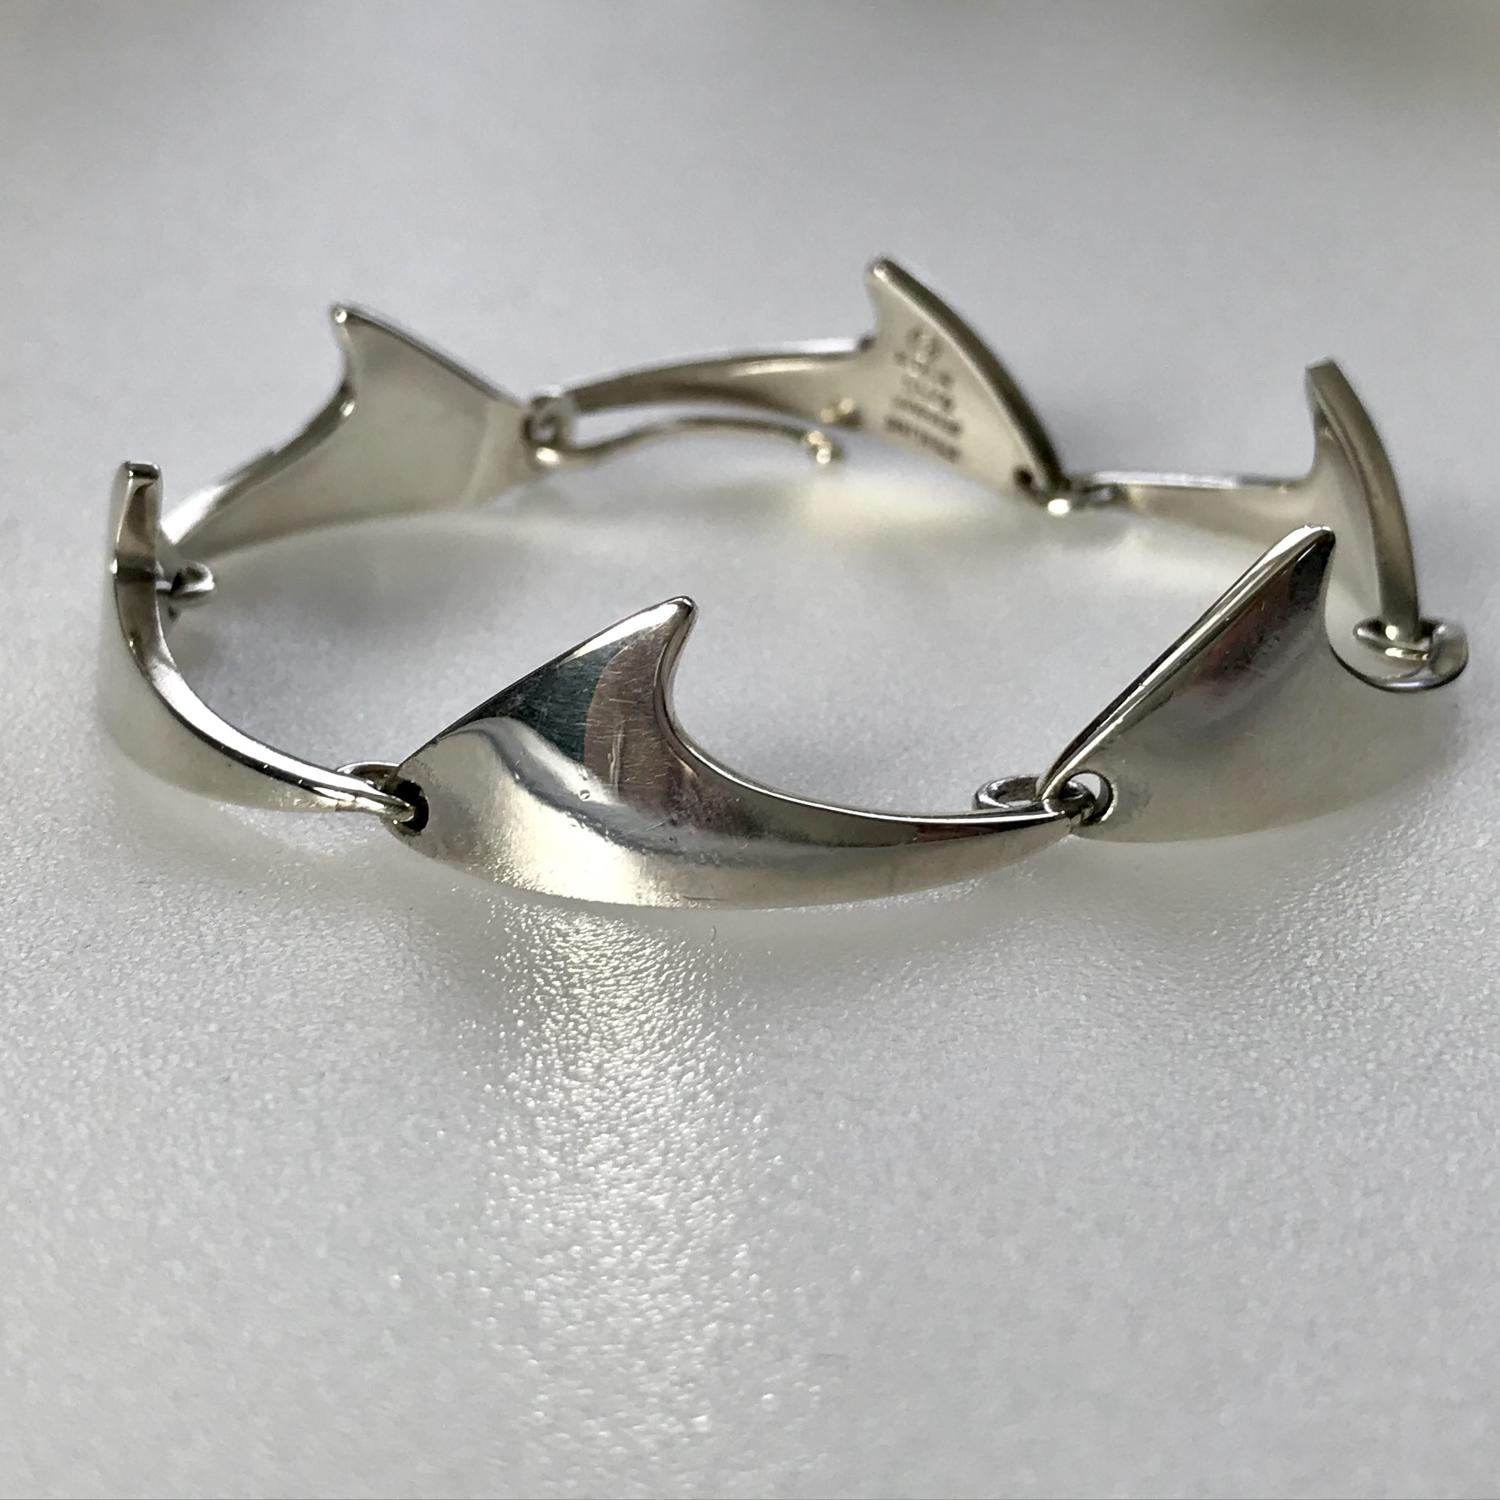 Bent Knudsen Sharkfin bracelet, Denmark 1960s